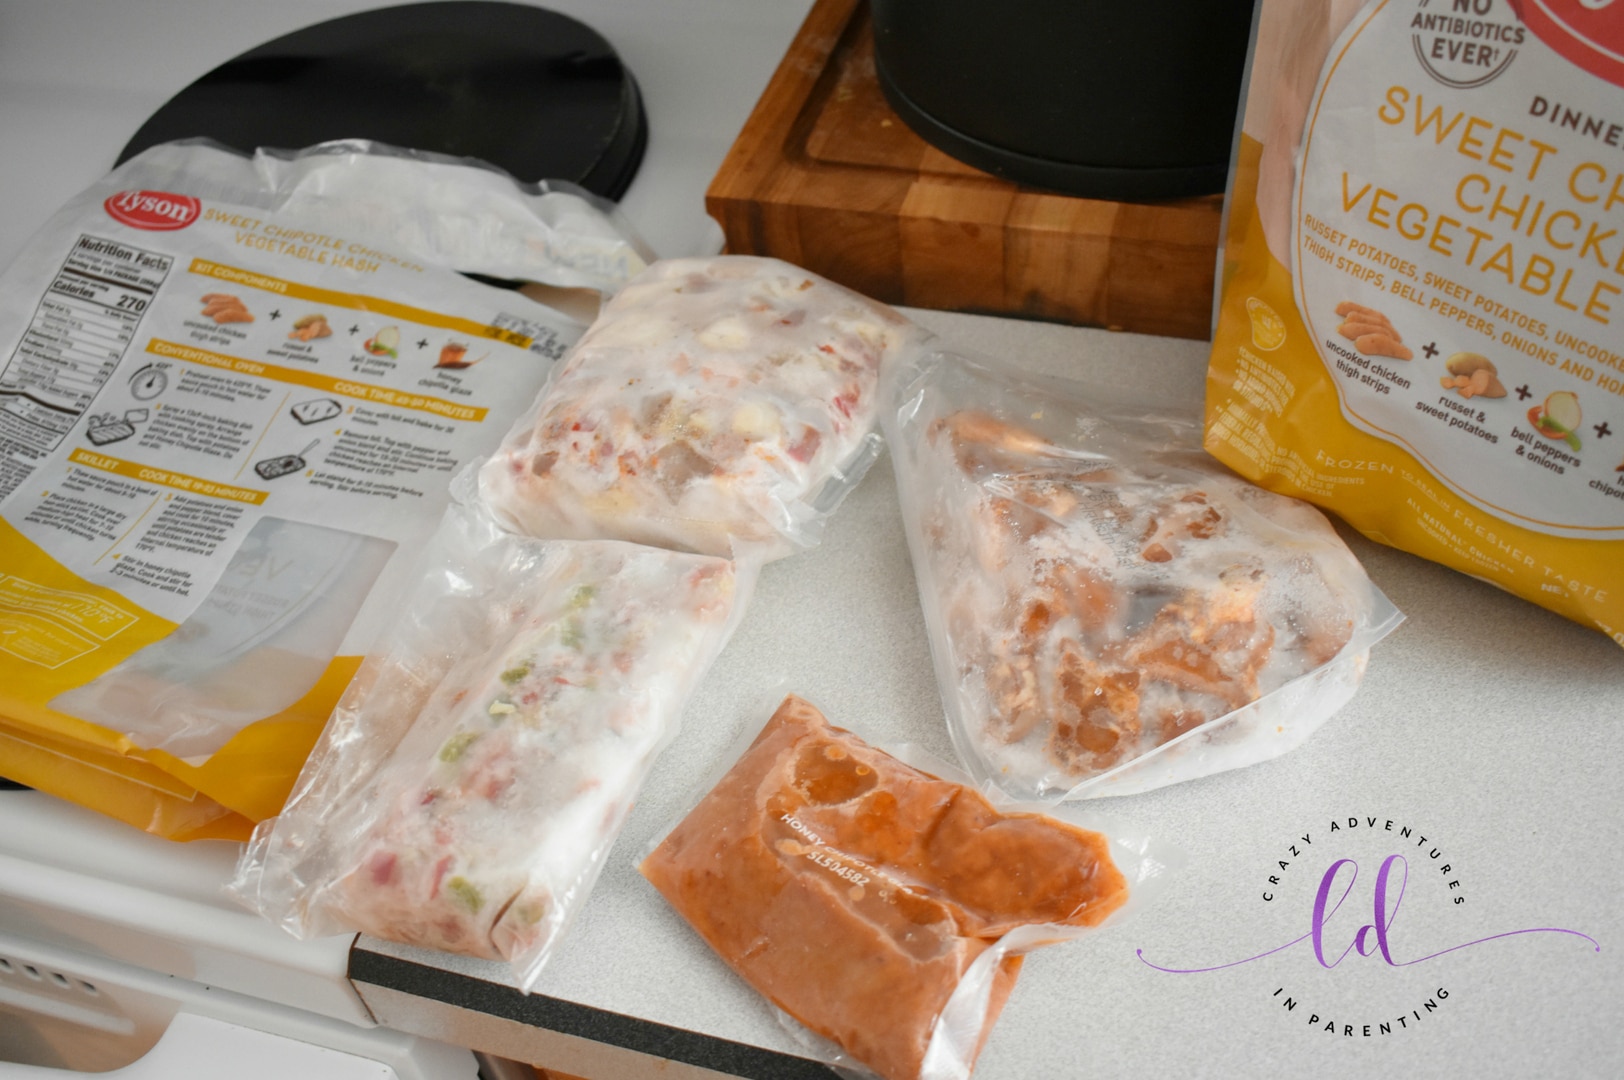 Tyson Sweet Chipotle Chicken & Vegetable Hash Frozen Dinner Kits ingredients